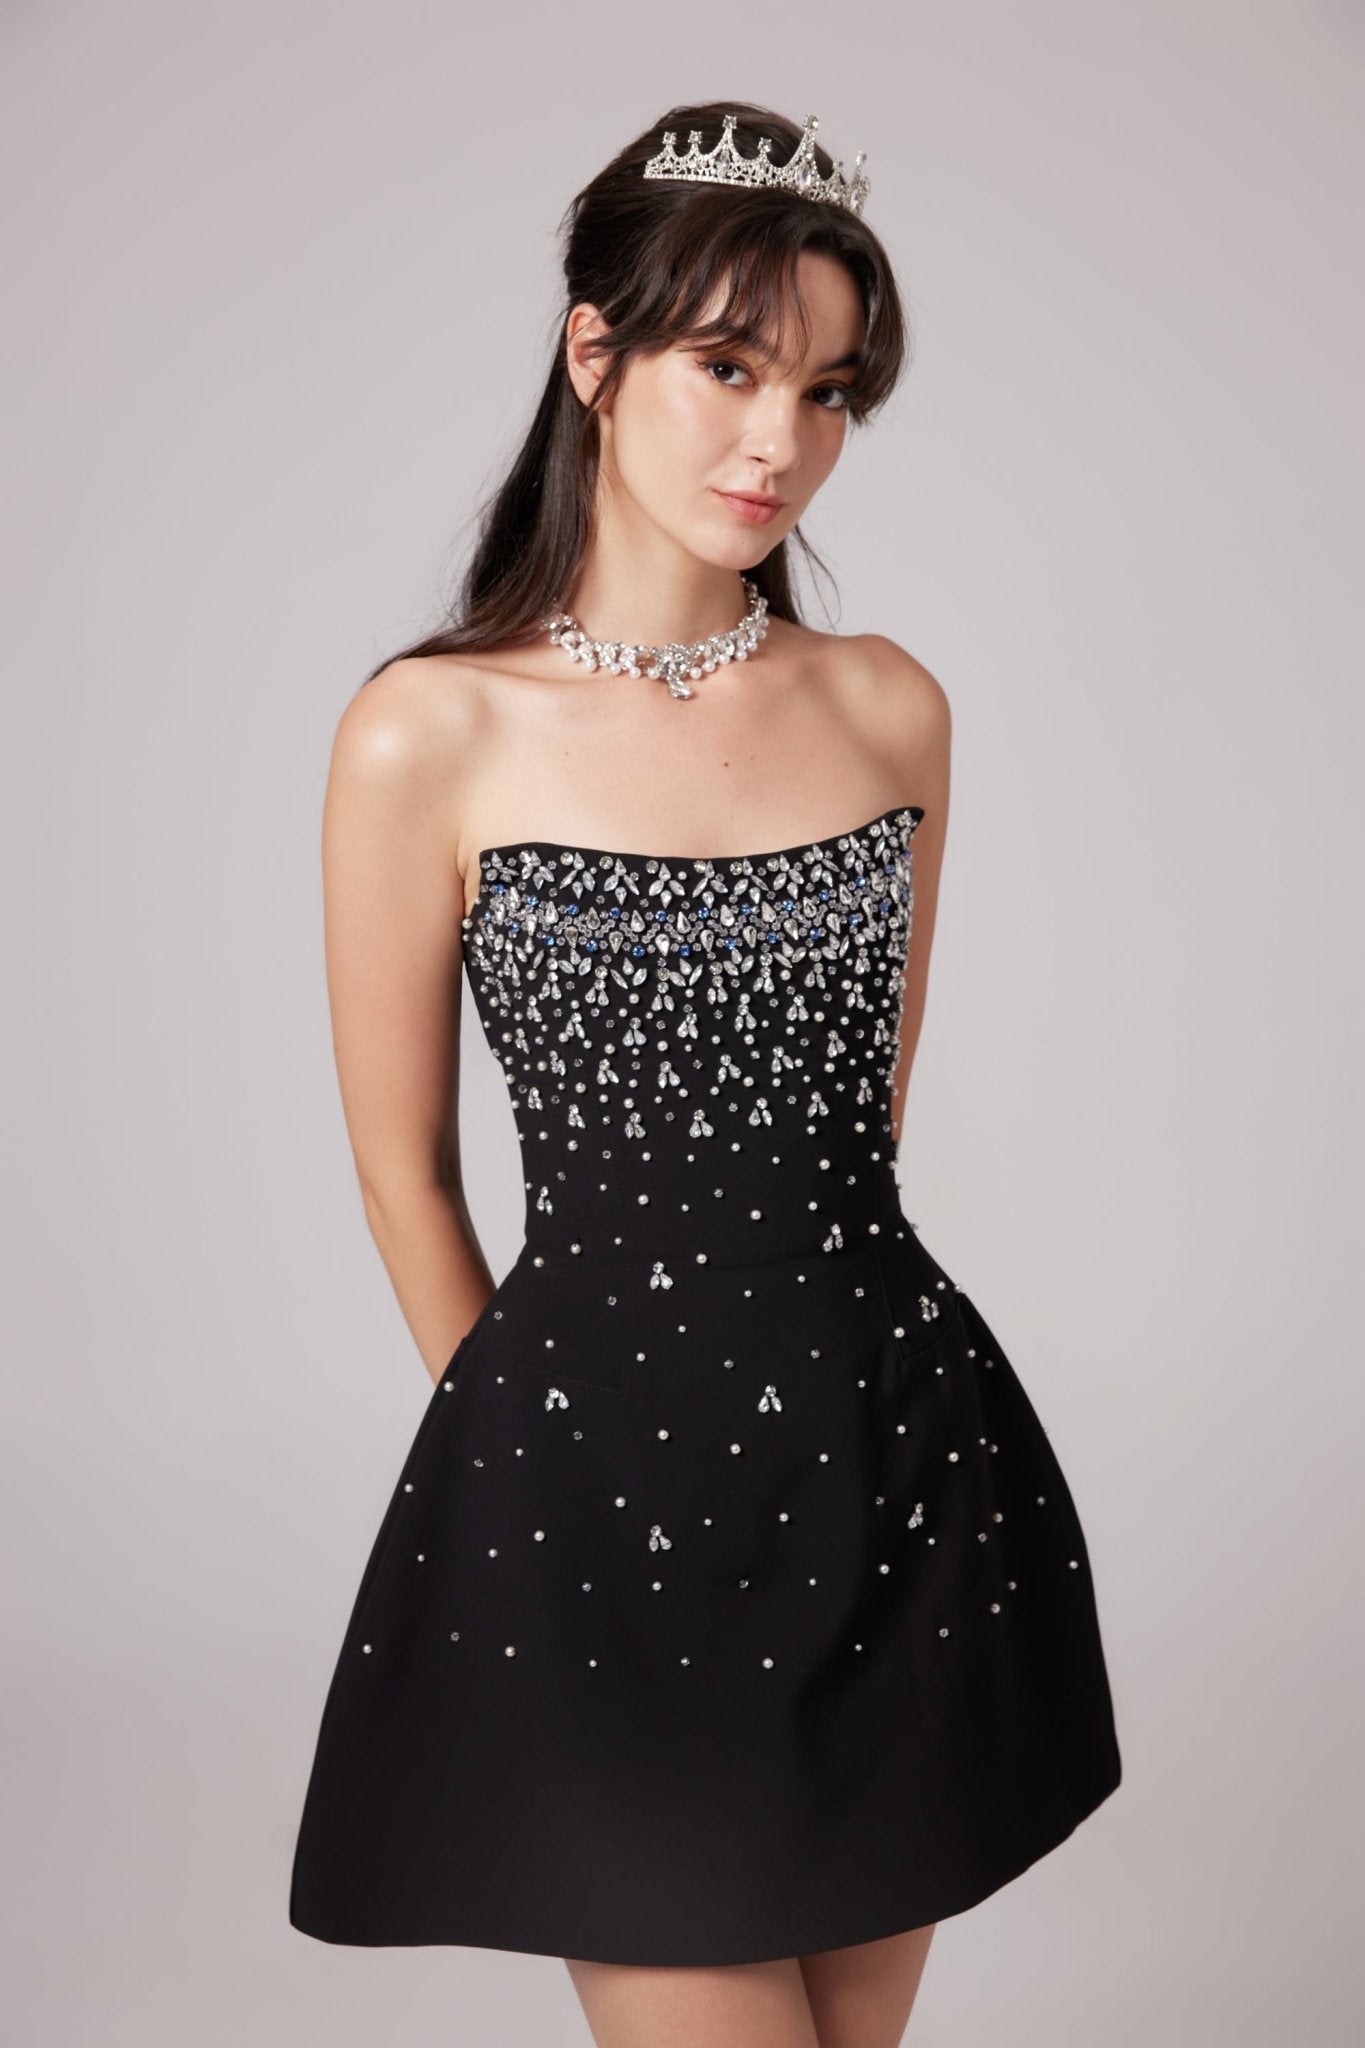 Melisande dress - Miss Rosier - Women's Online Boutique